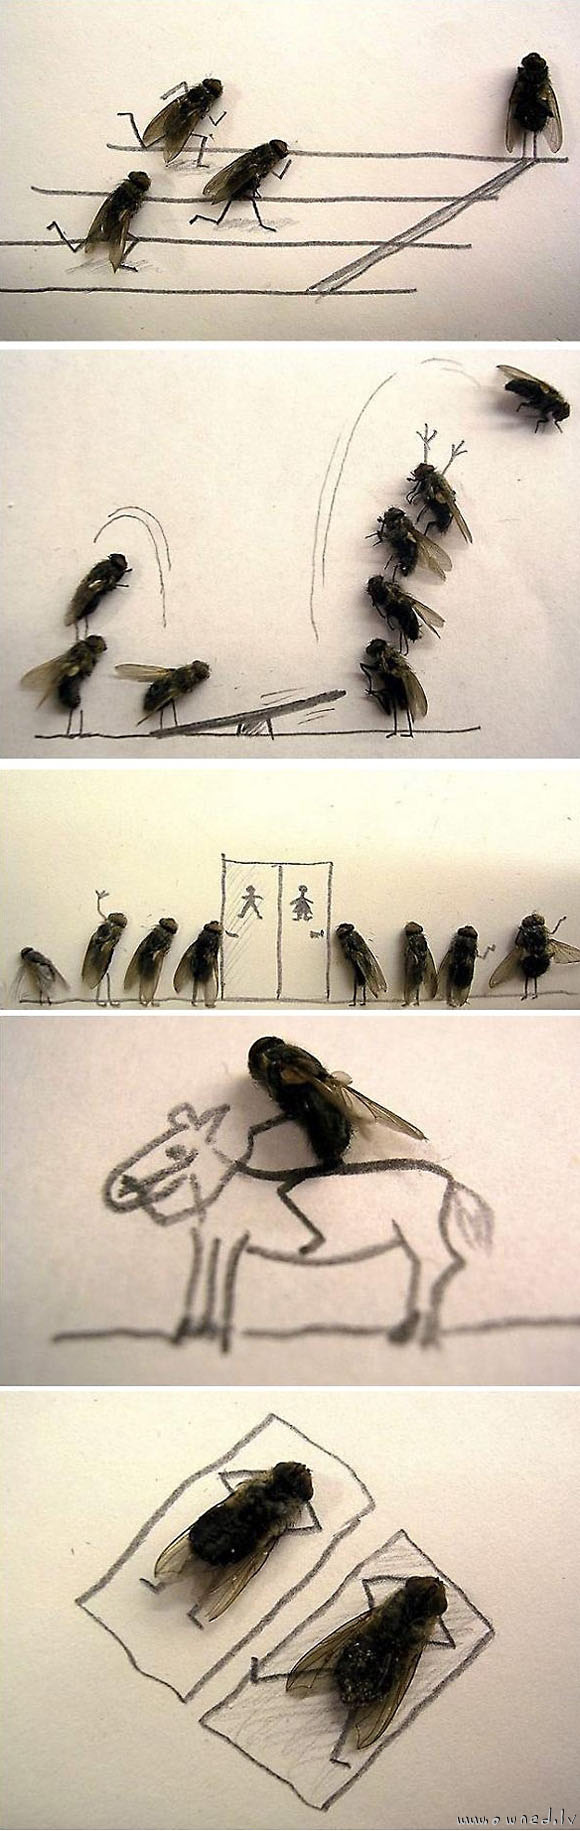 Dead flies art